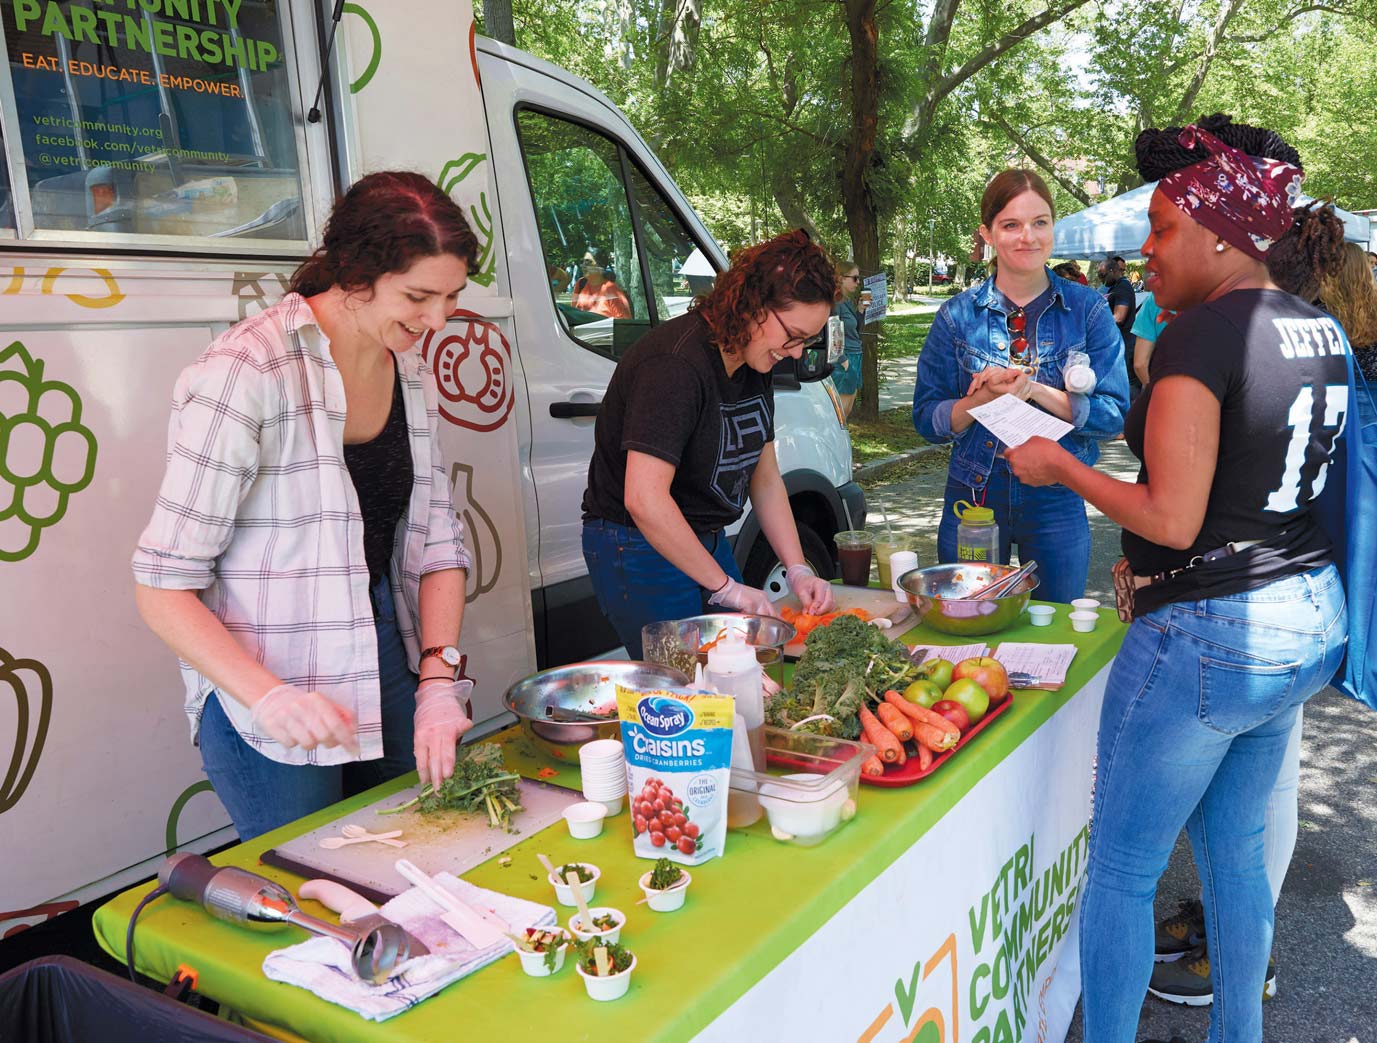 Vetri Community Partnership travels to Clark Park Farmers' Market to teach healthy cooking basics.